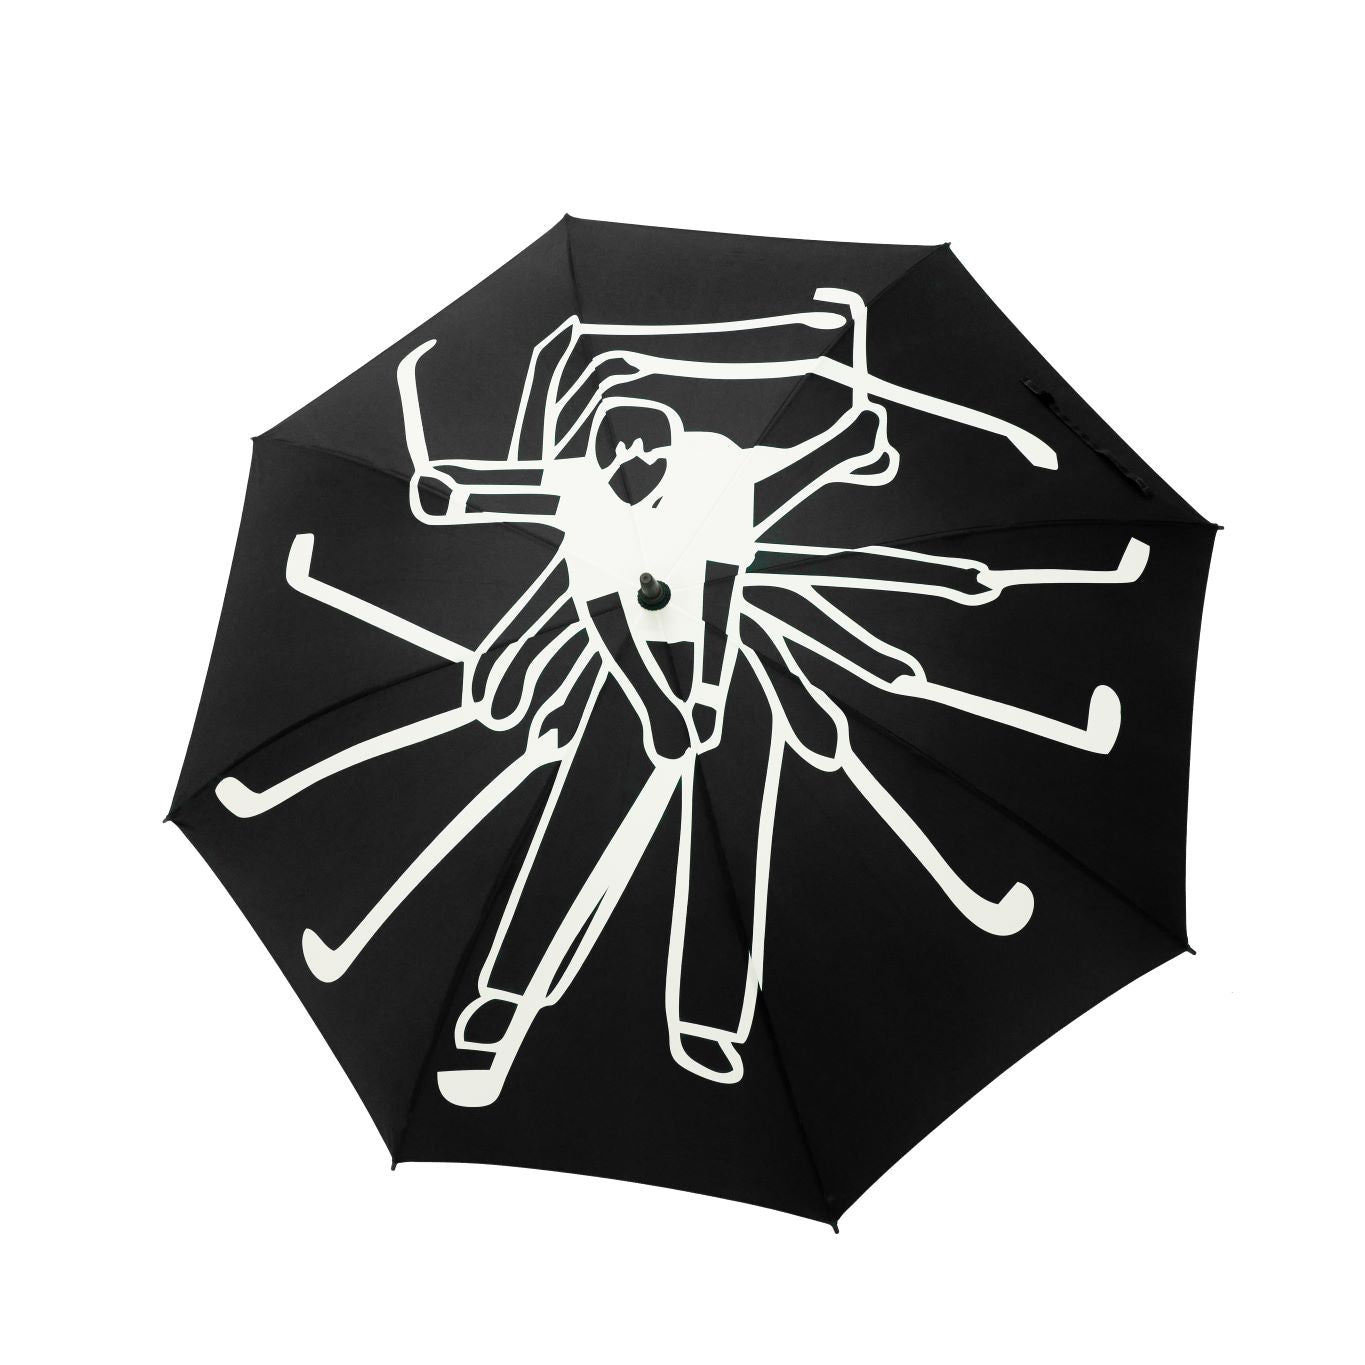 Black Swingman Golf Umbrella